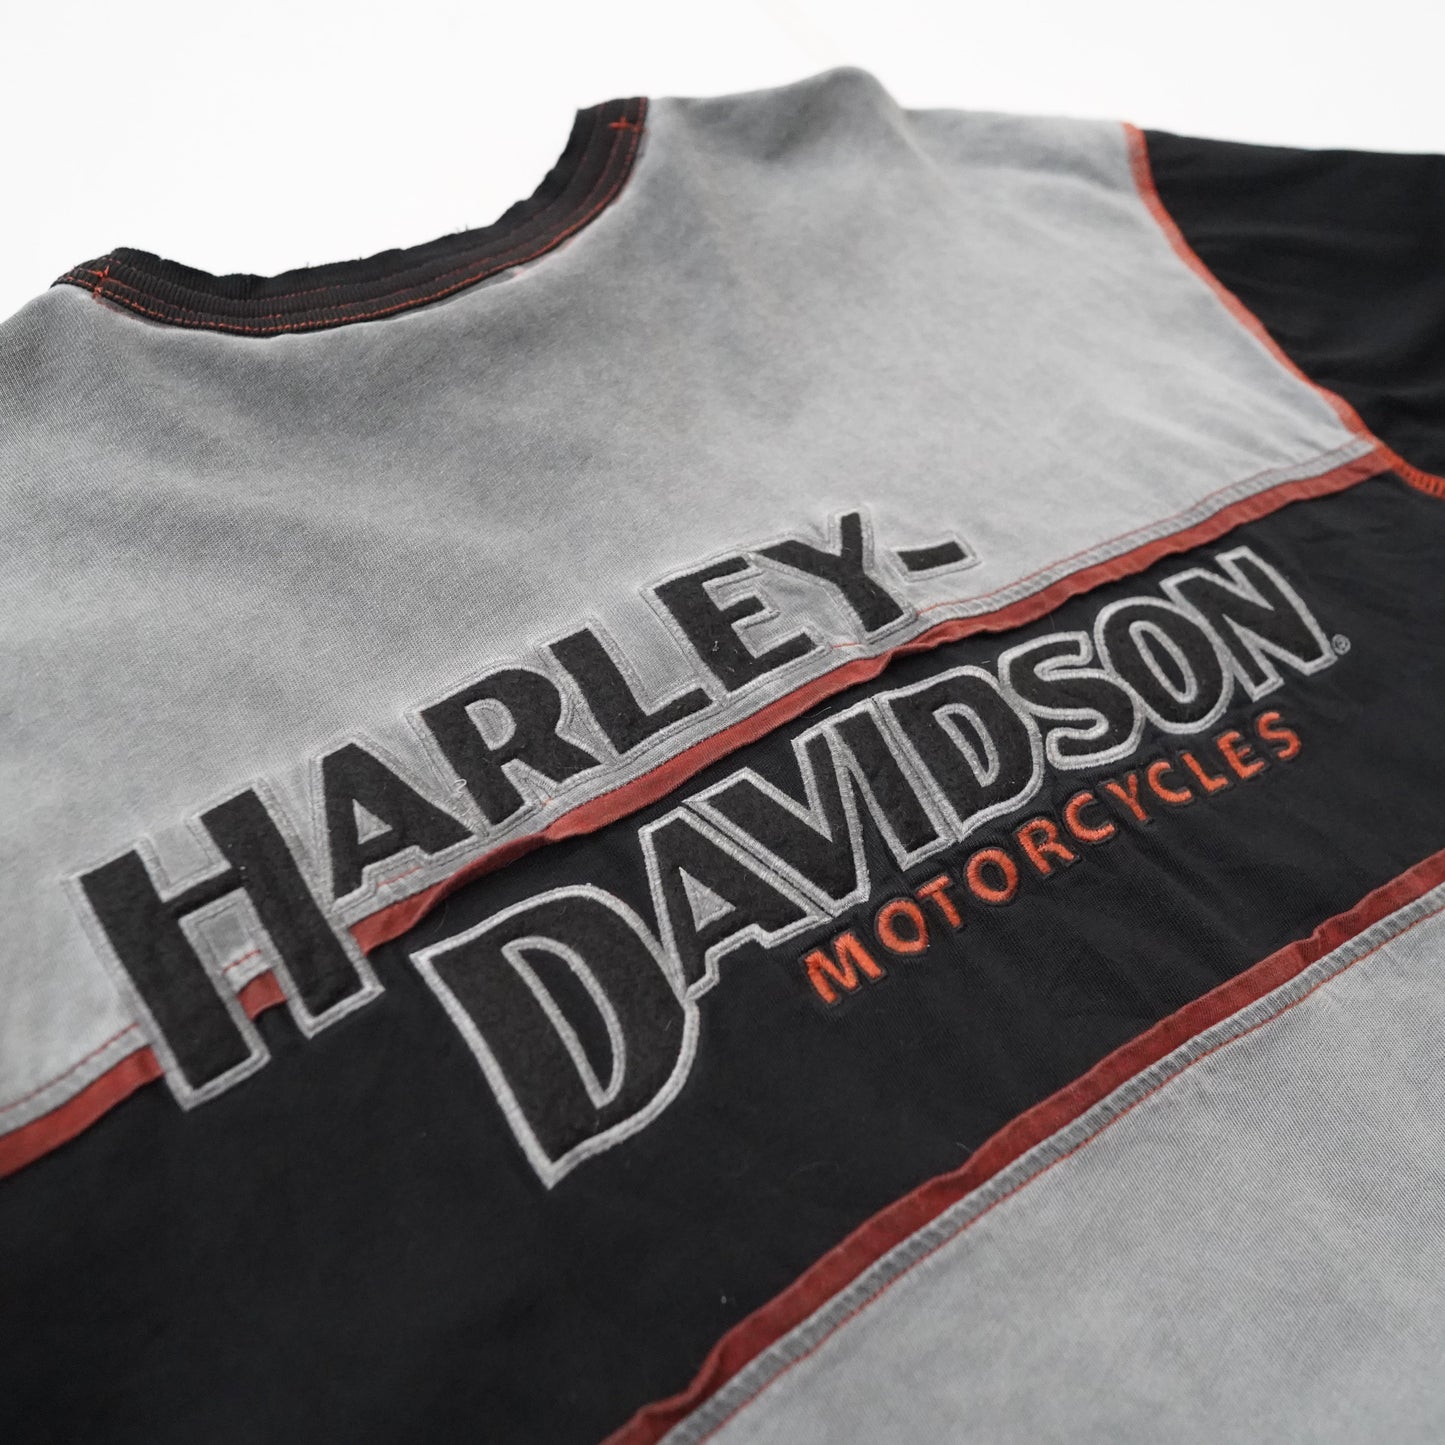 HARLEY DAVIDSON long tee